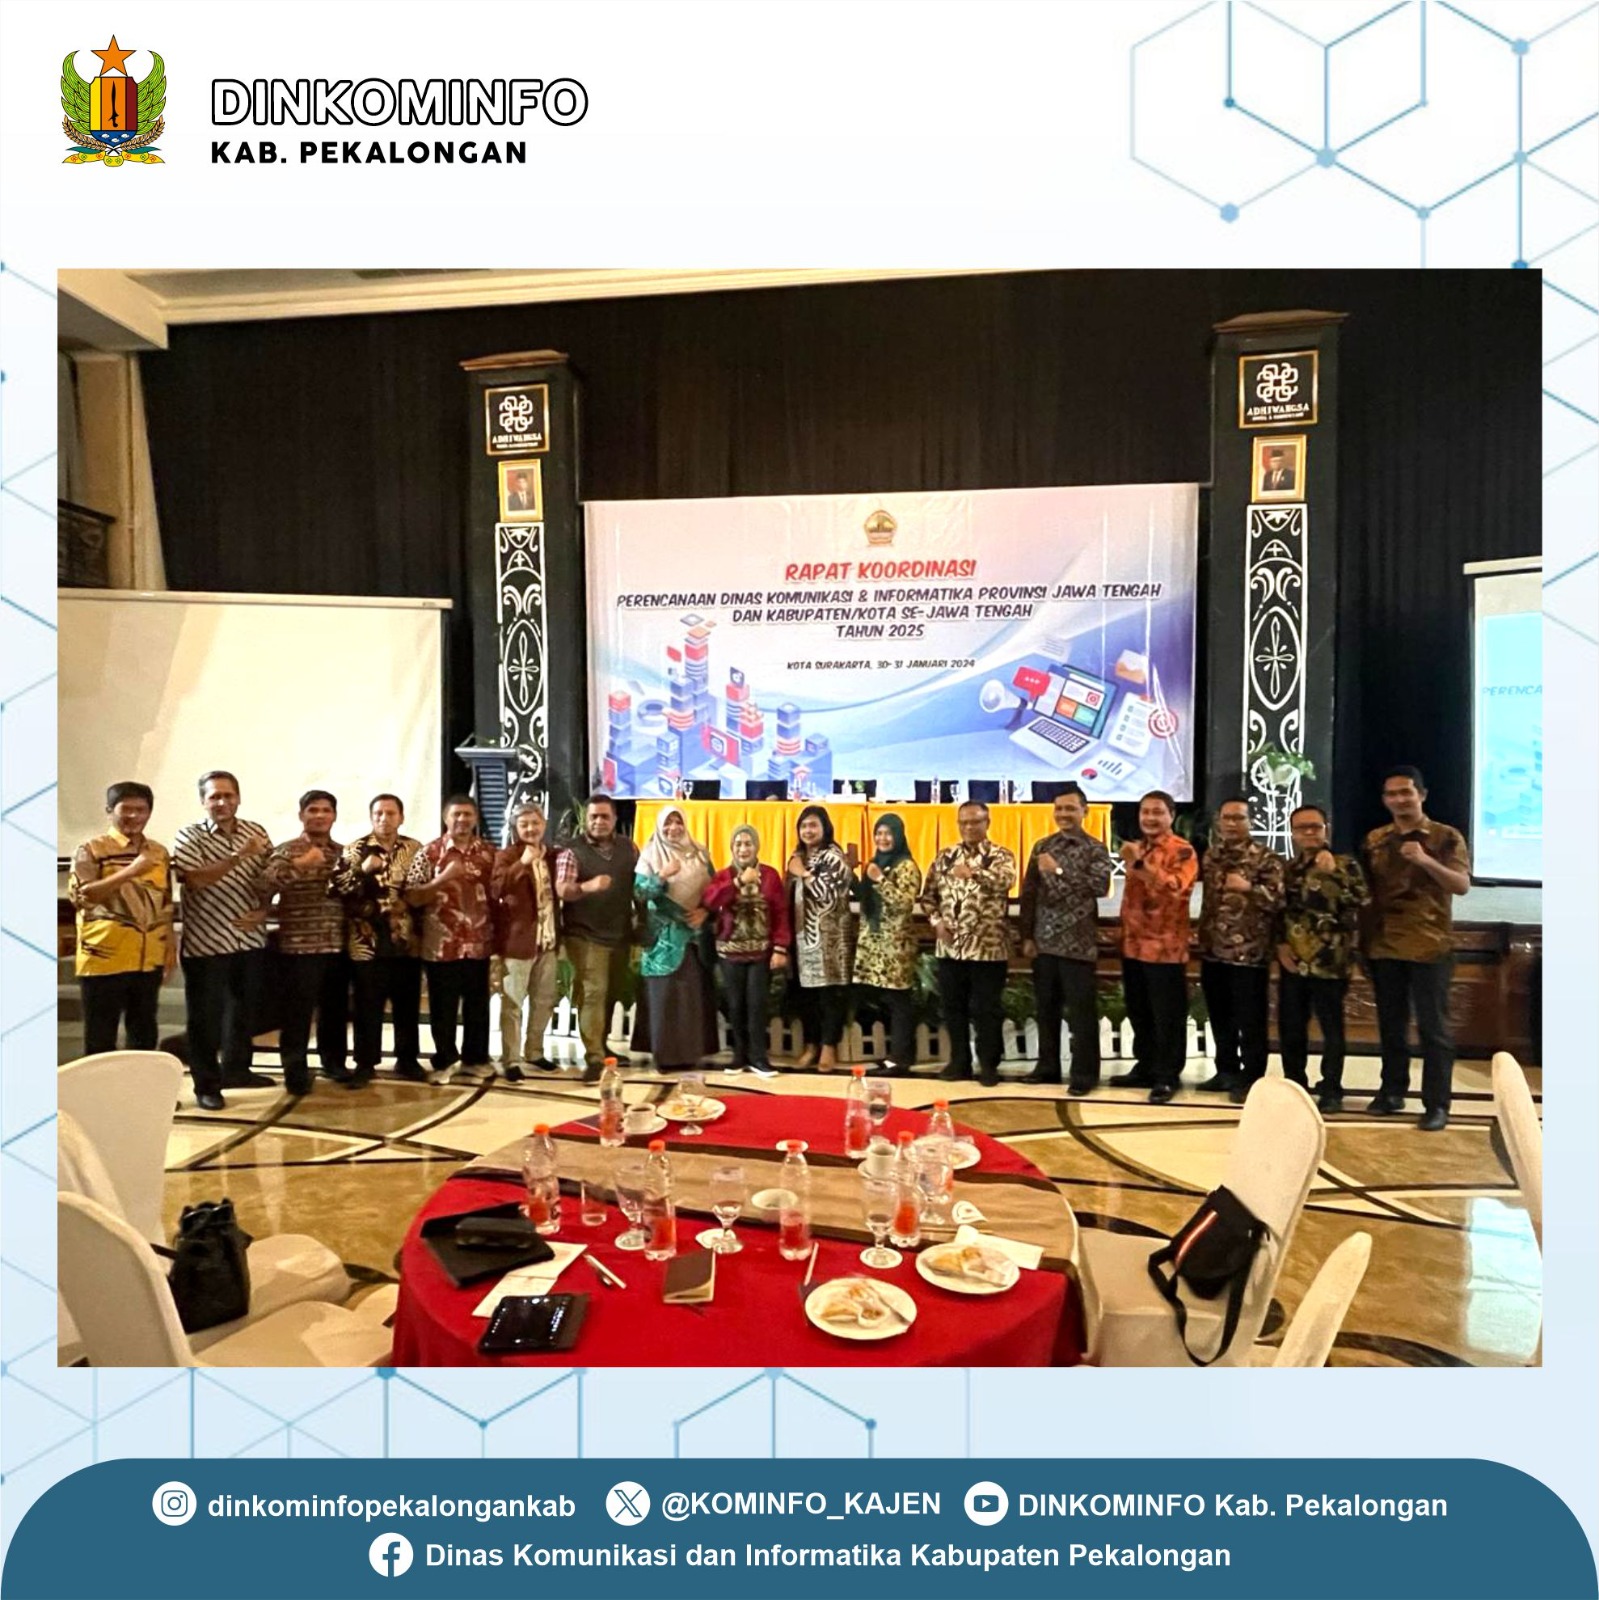 Dinkominfo Kabupaten Pekalongan Dukung Percepatan Digitalisasi Pelayanan Publik dan Pelaksanaan Audit SPBE/TIK Provinsi Jawa Tengah   